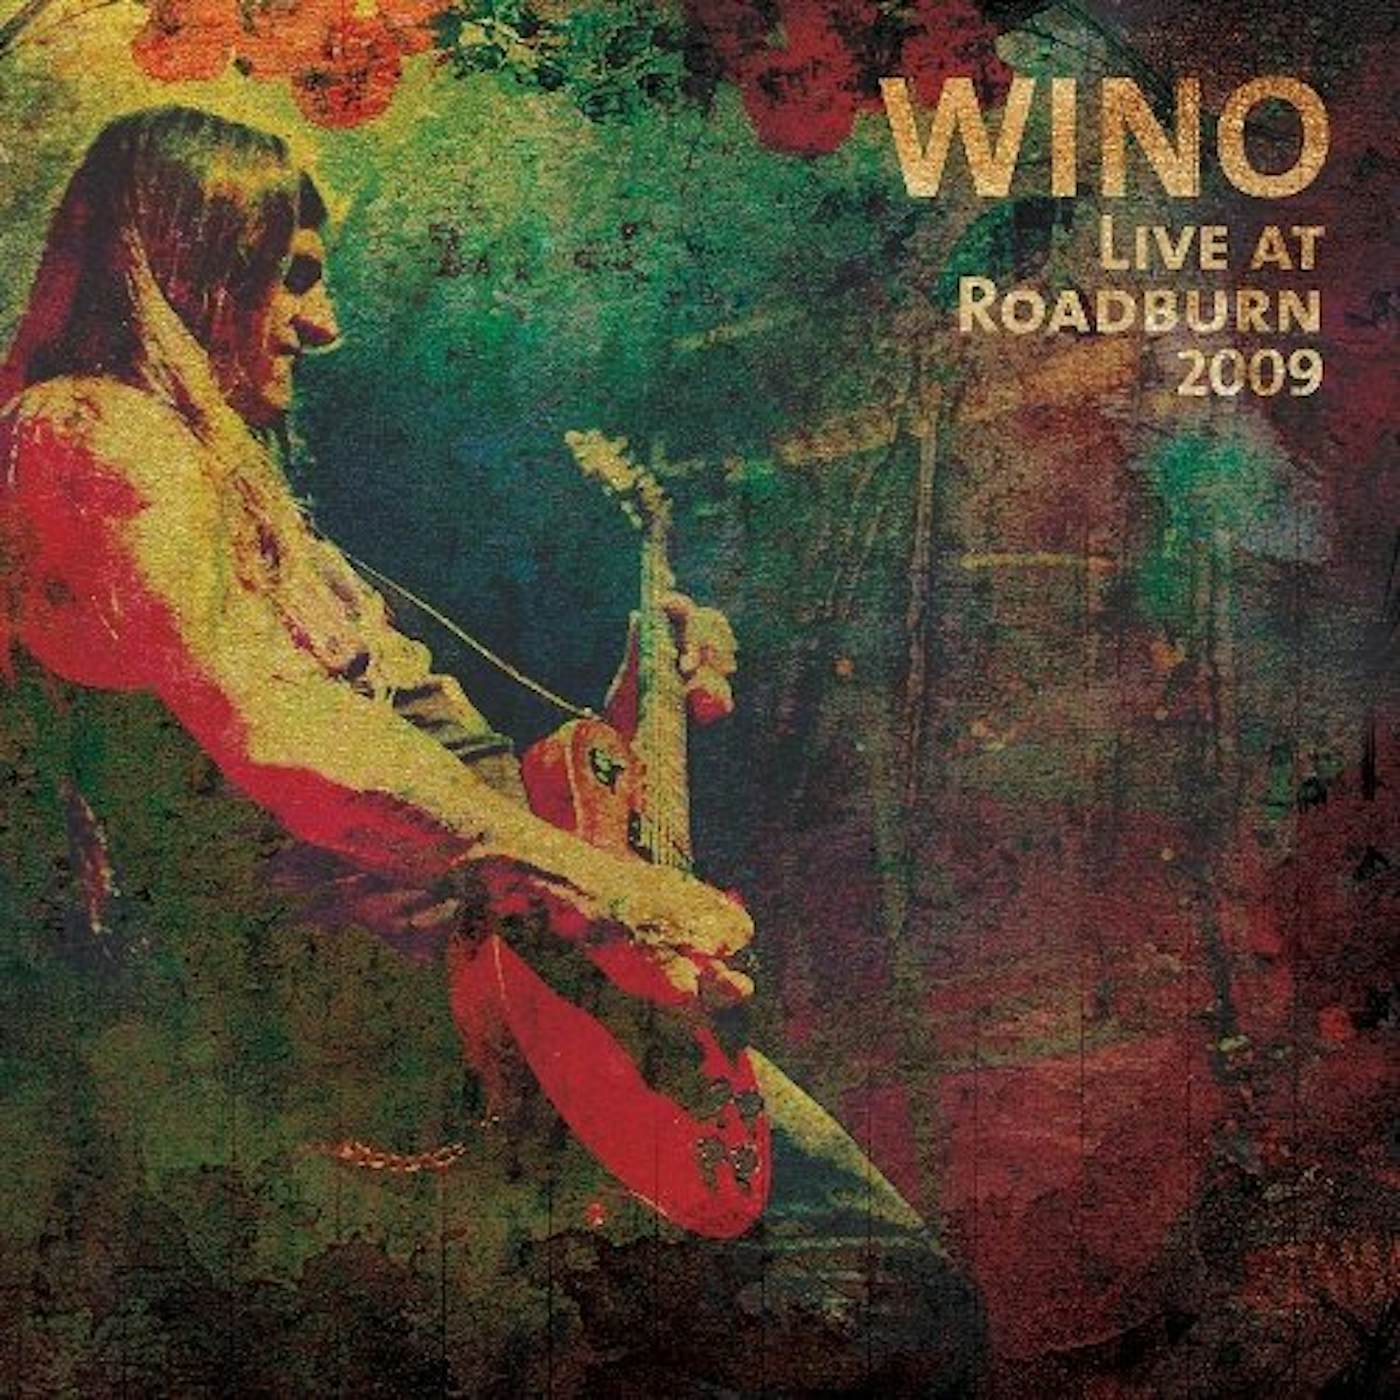 Wino LIVE AT ROADBURN 2009 Vinyl Record - UK Release